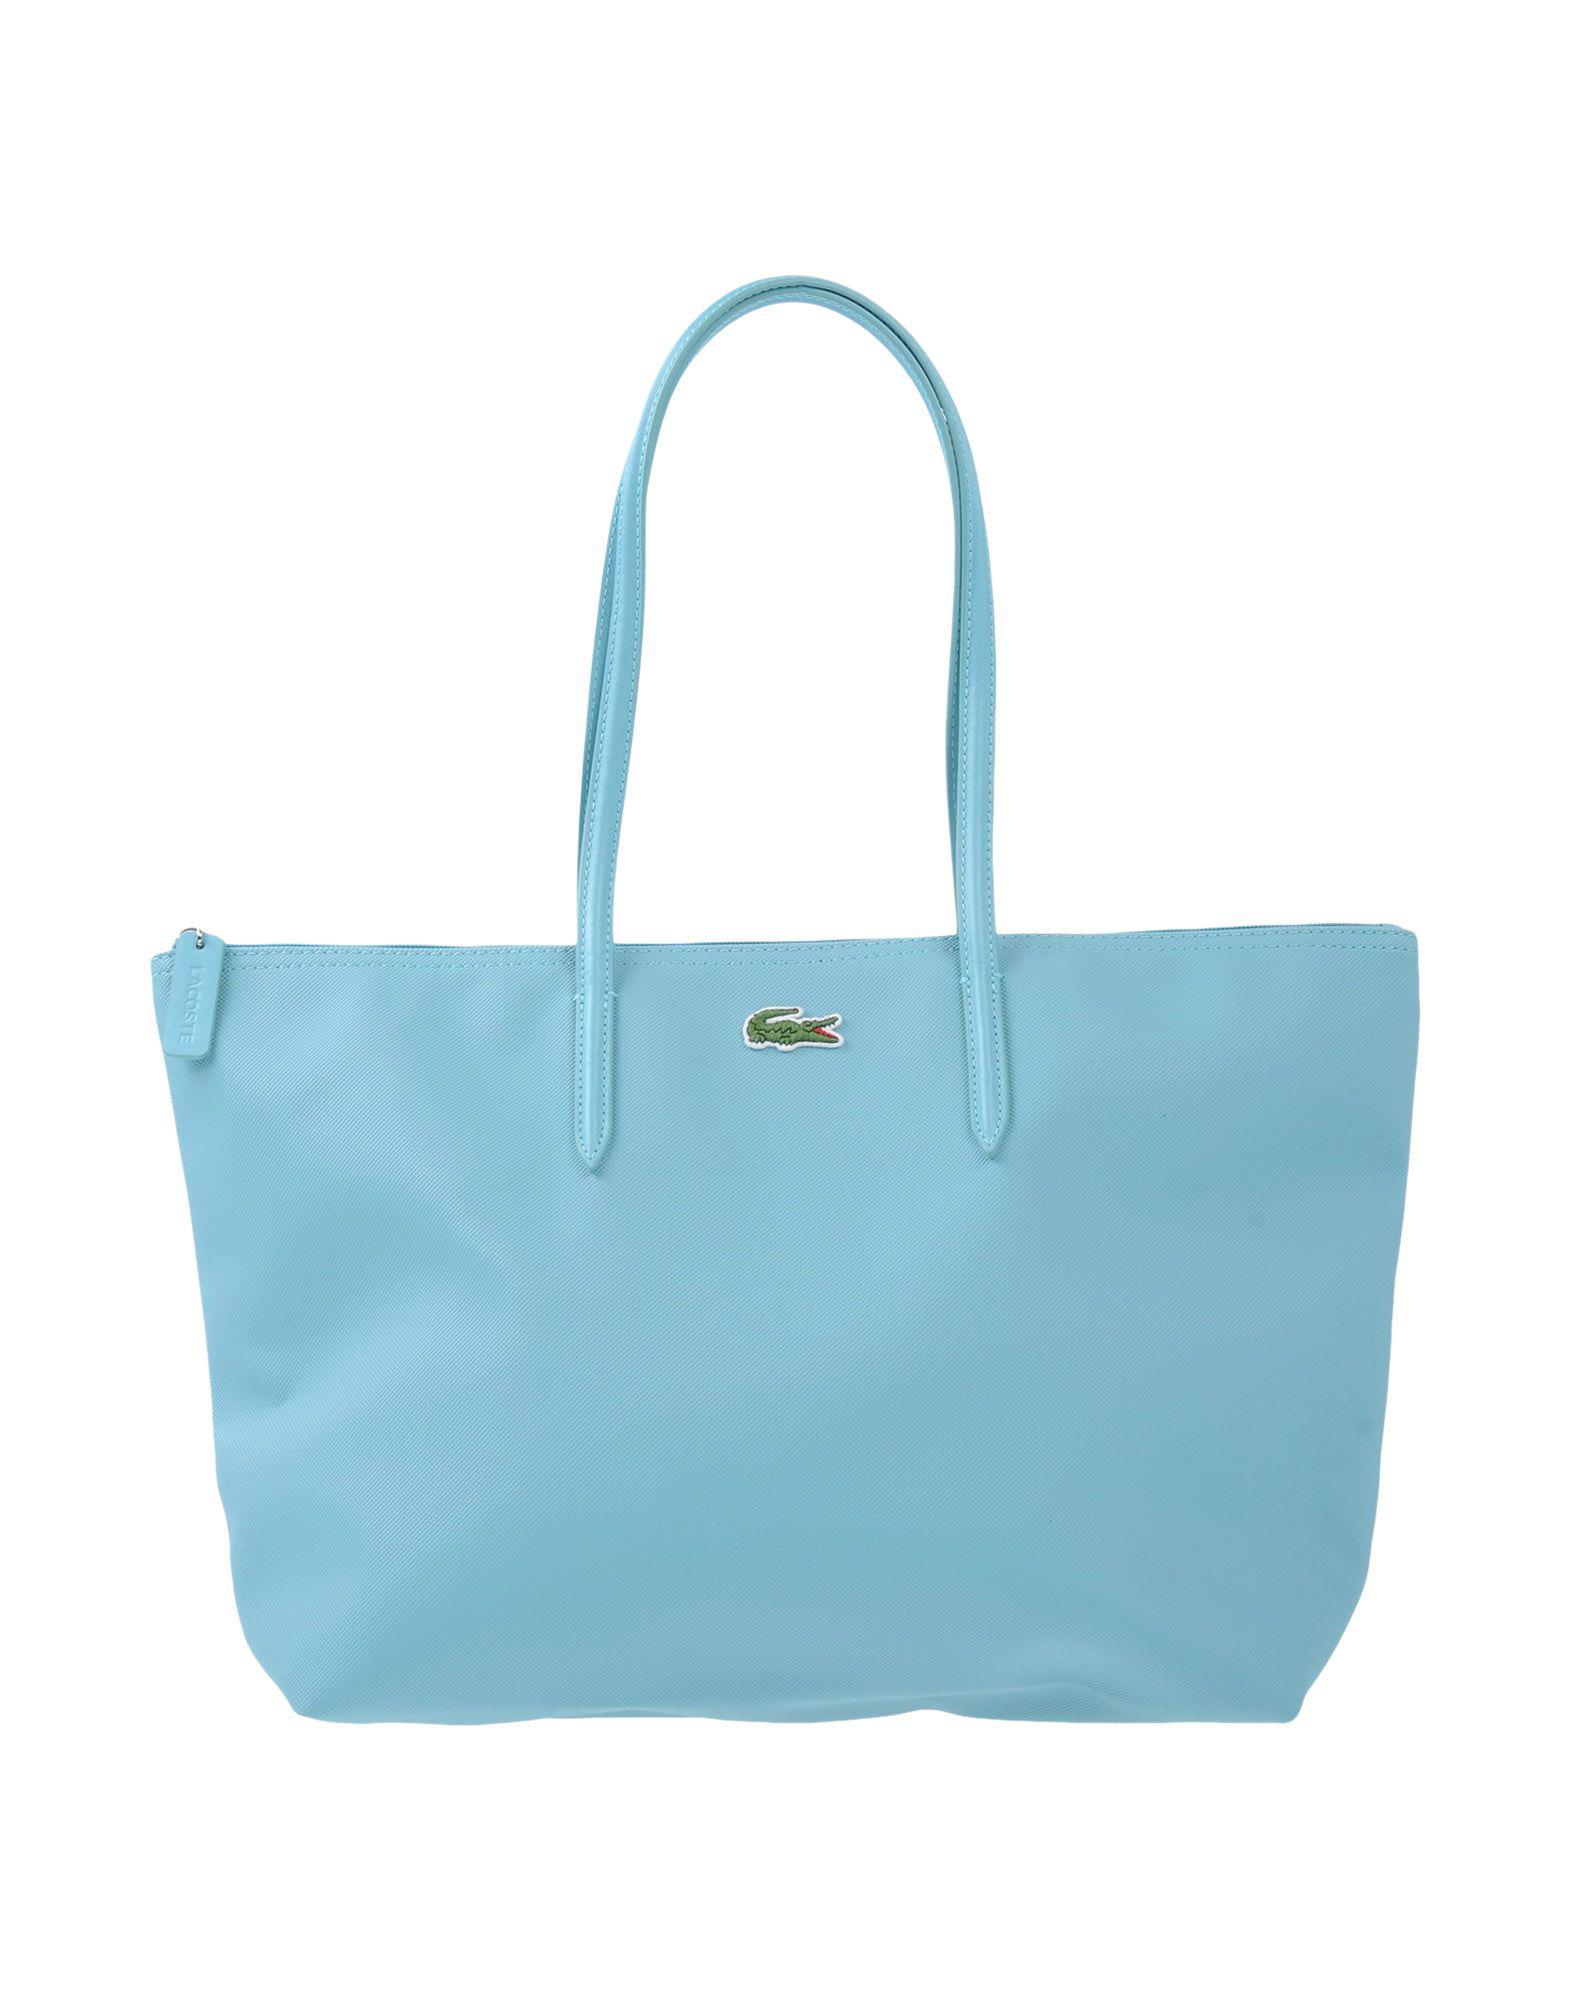 Lacoste Handbag in Blue | Lyst